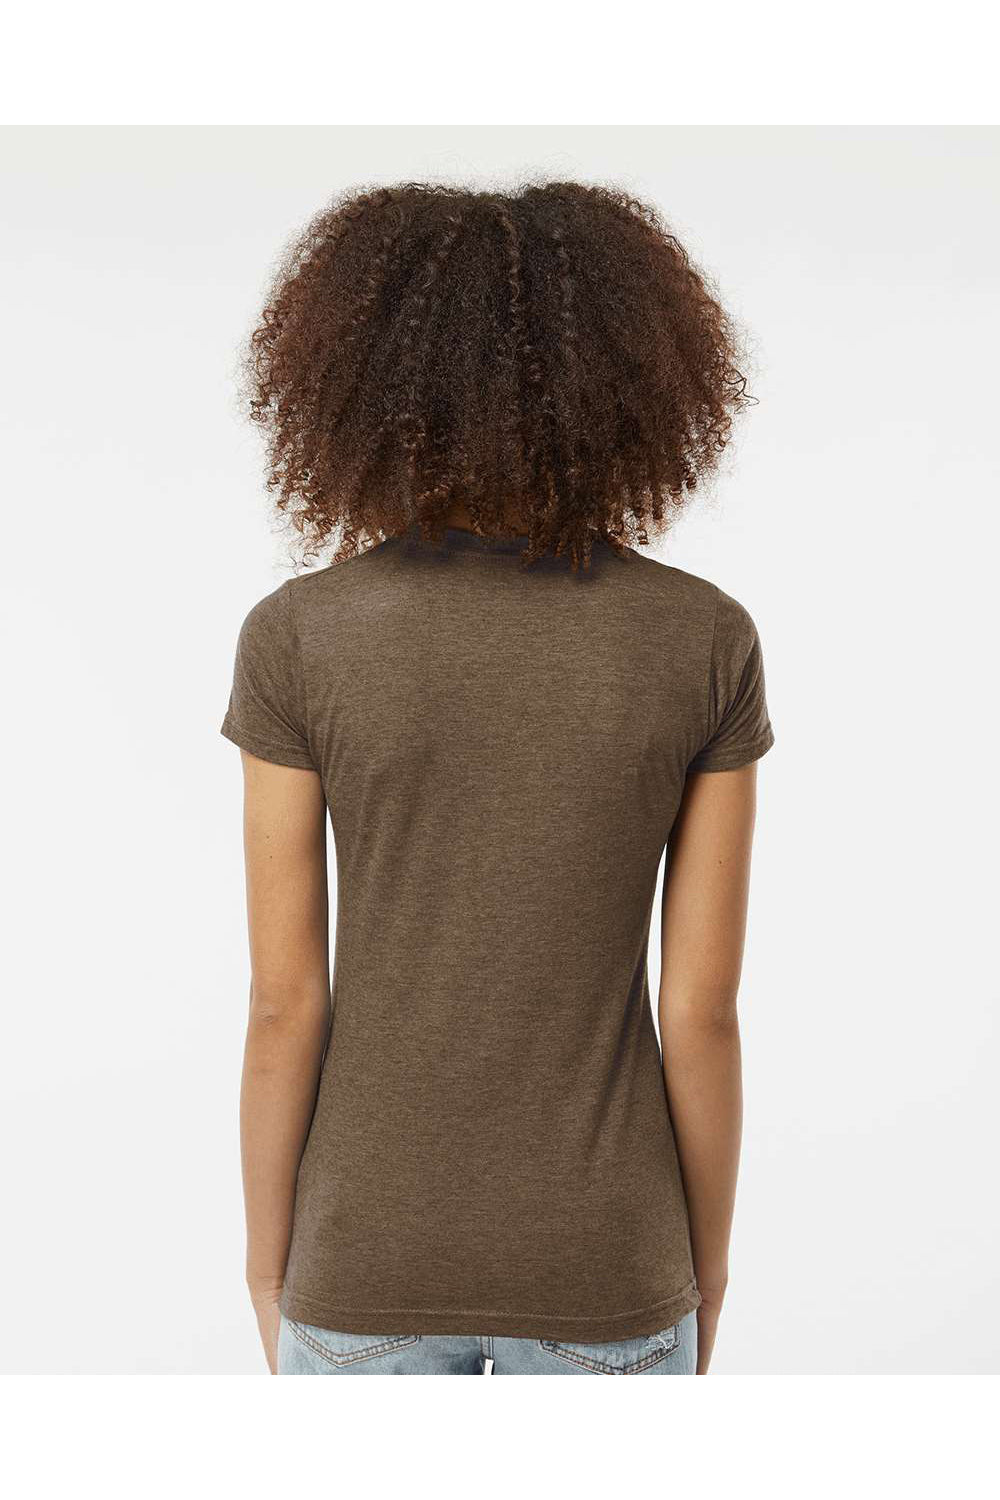 Tultex 240 Womens Poly-Rich Short Sleeve Crewneck T-Shirt Heather Brown Model Back